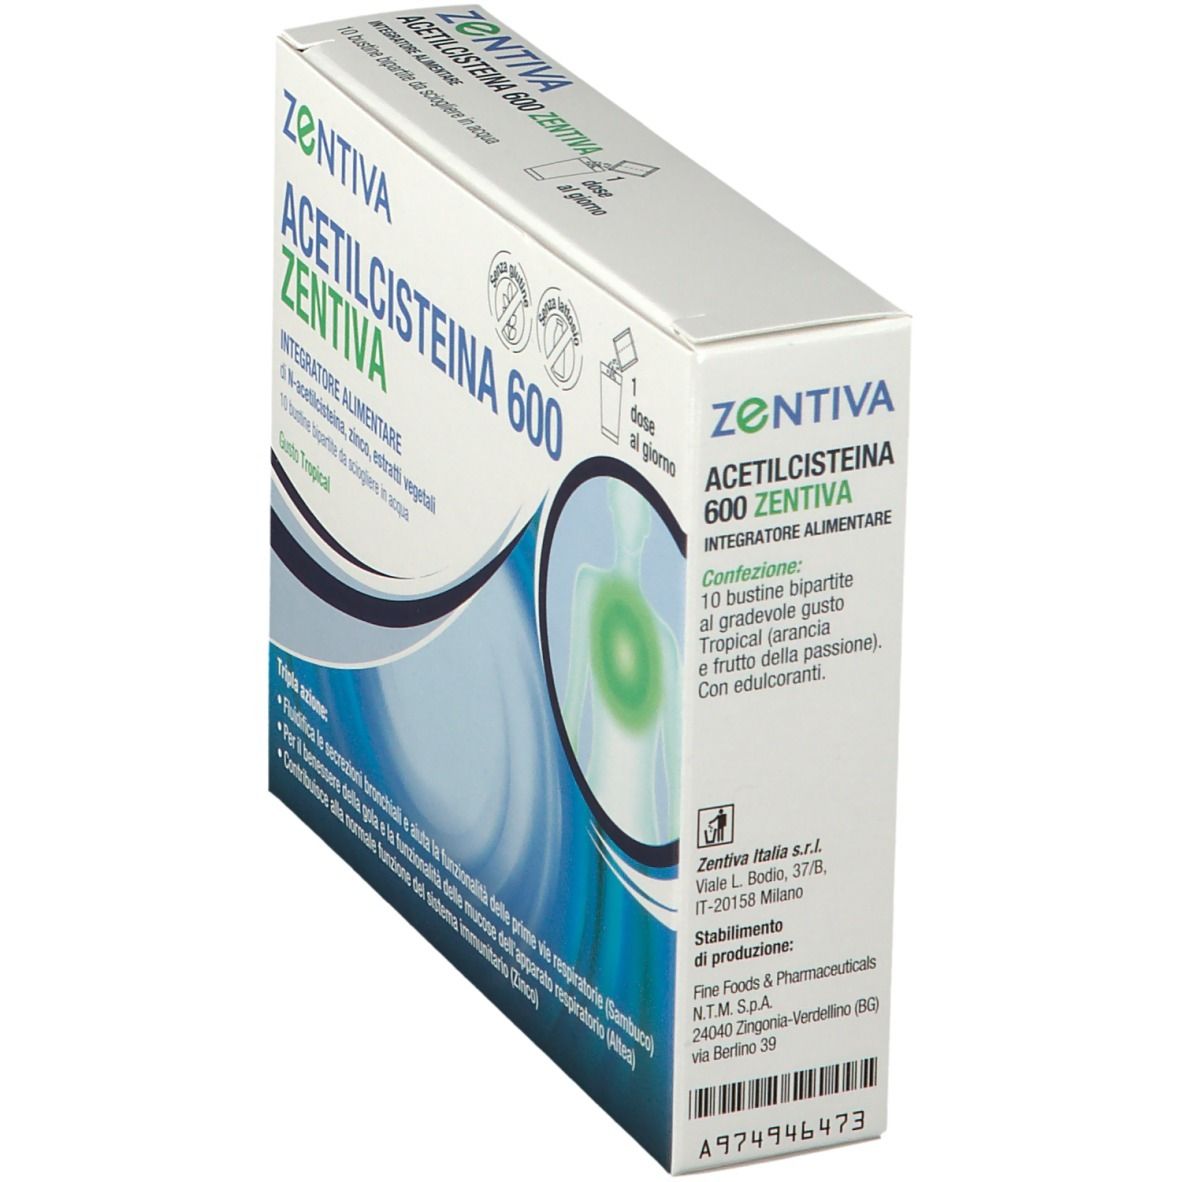 Zentiva Acetilcisteina 600